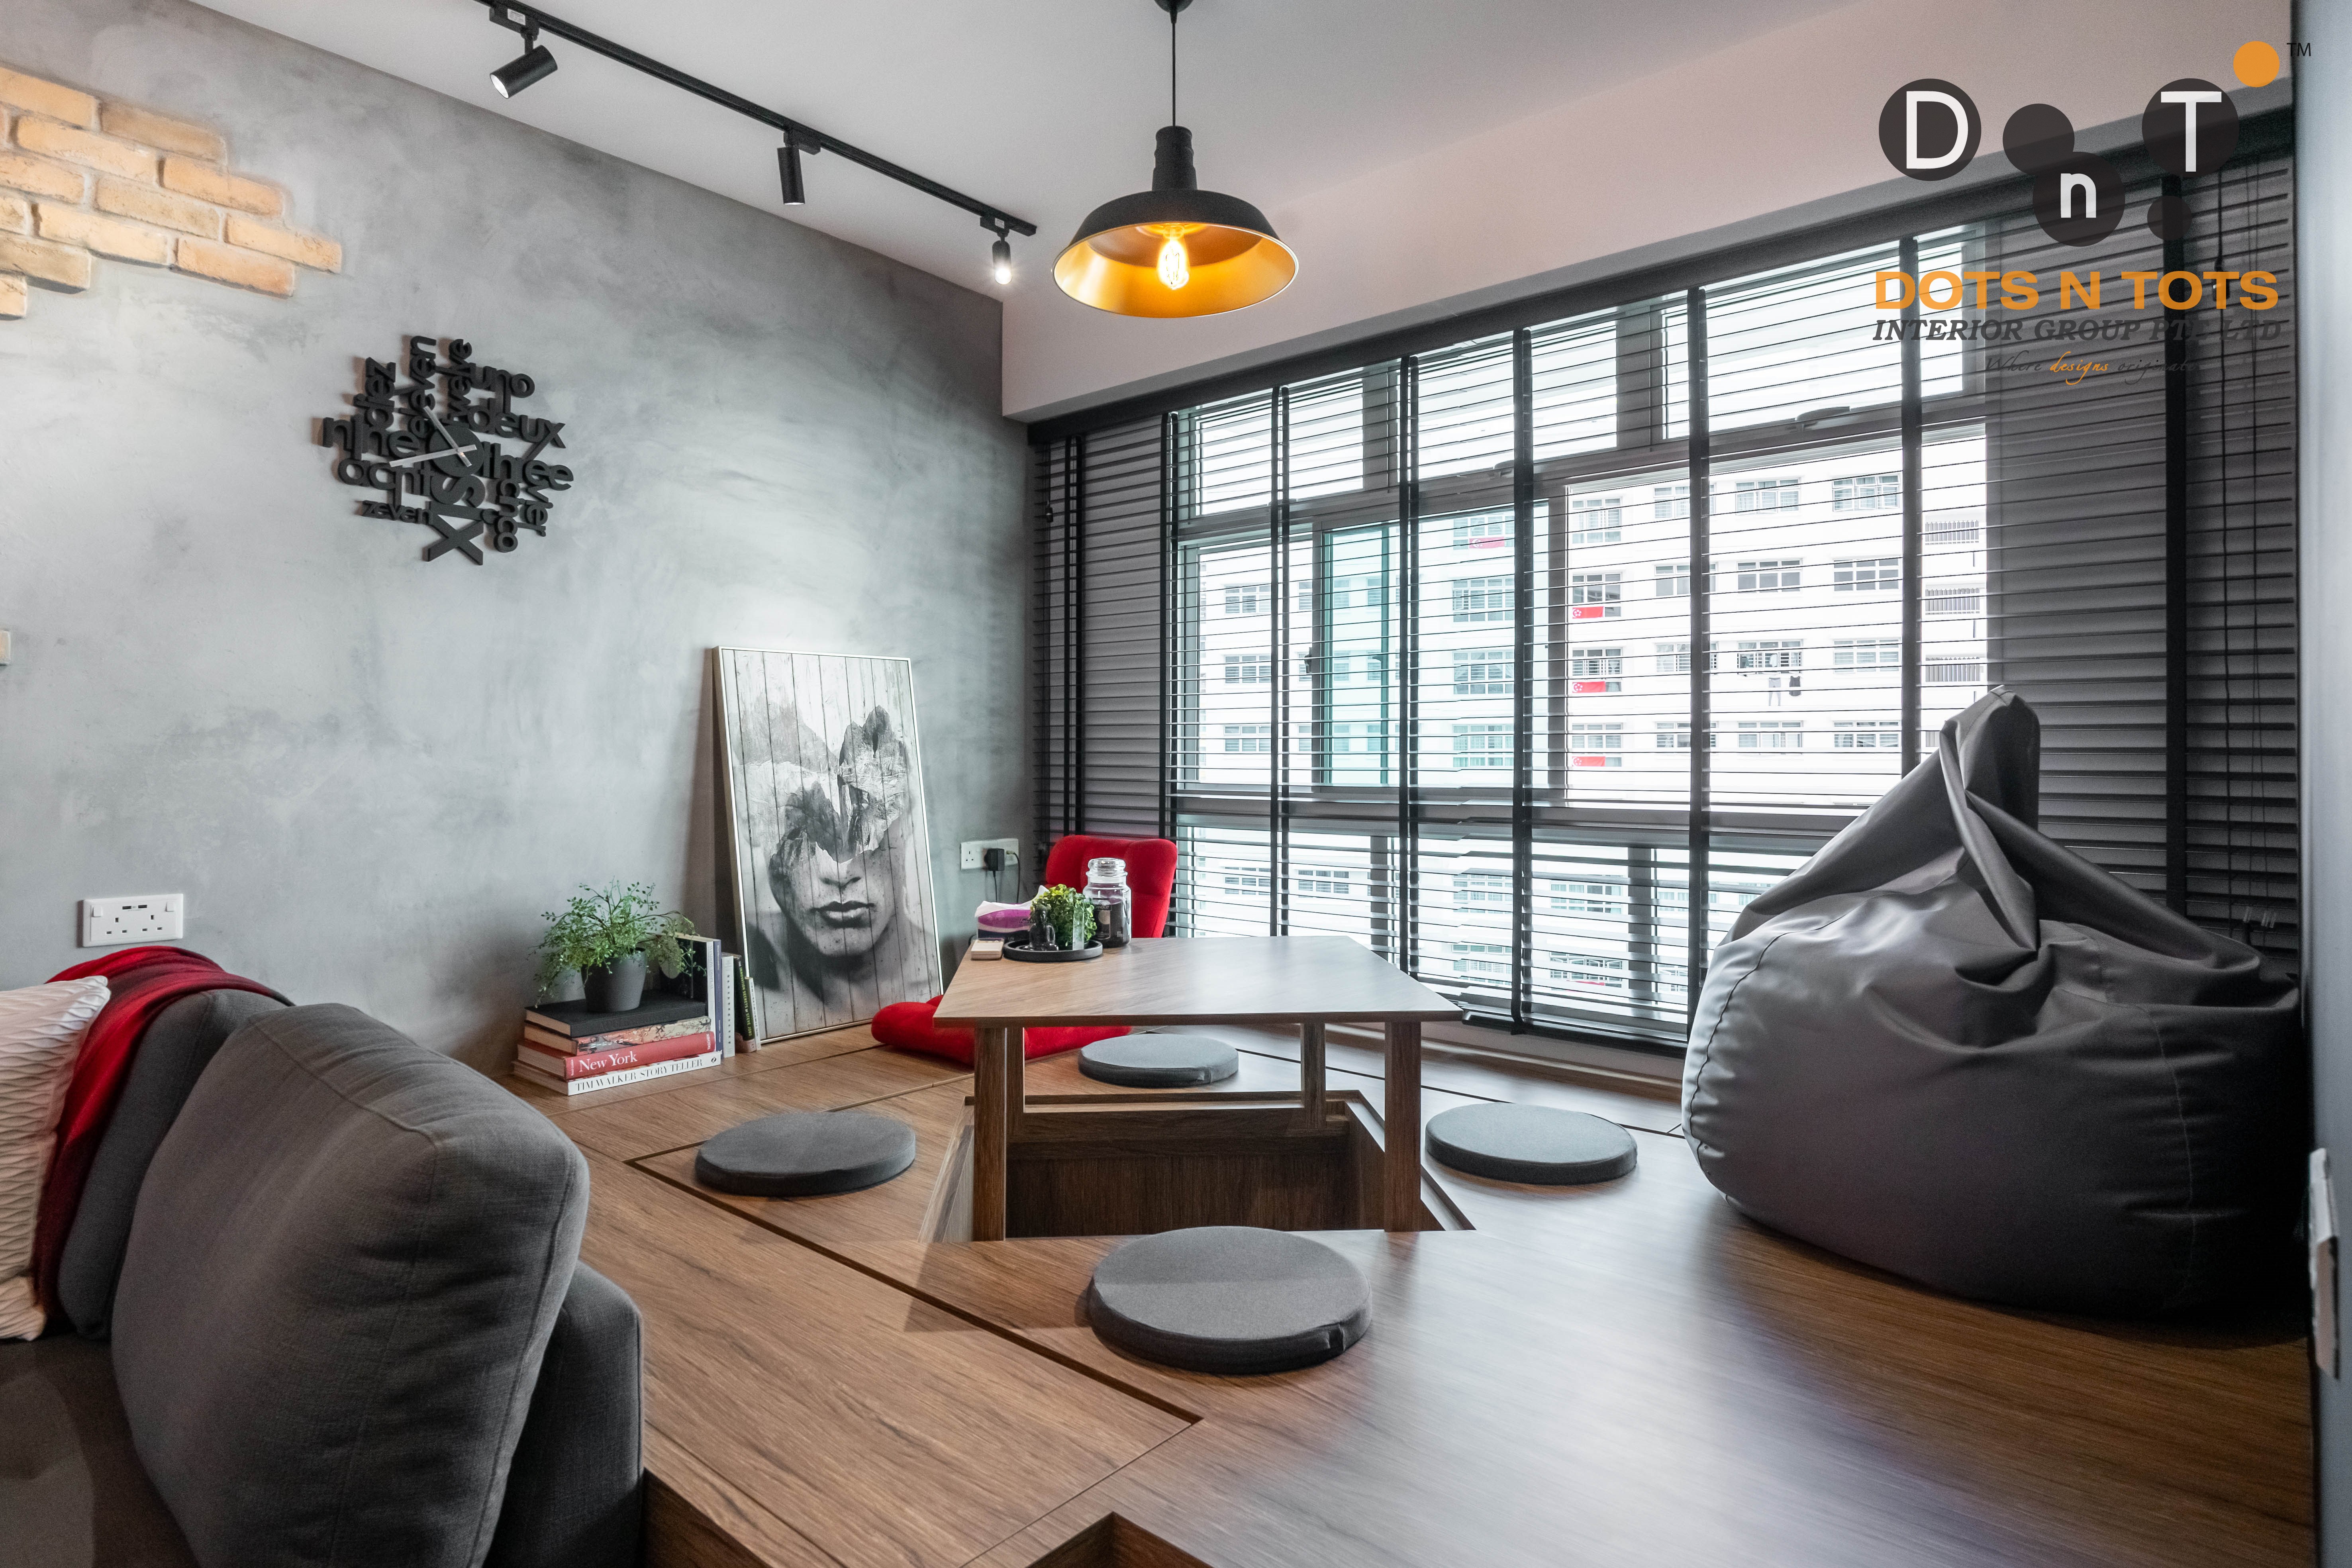 Industrial Design - Living Room - HDB Studio Apartment - Design by Dots n Tots Interior Pte Ltd